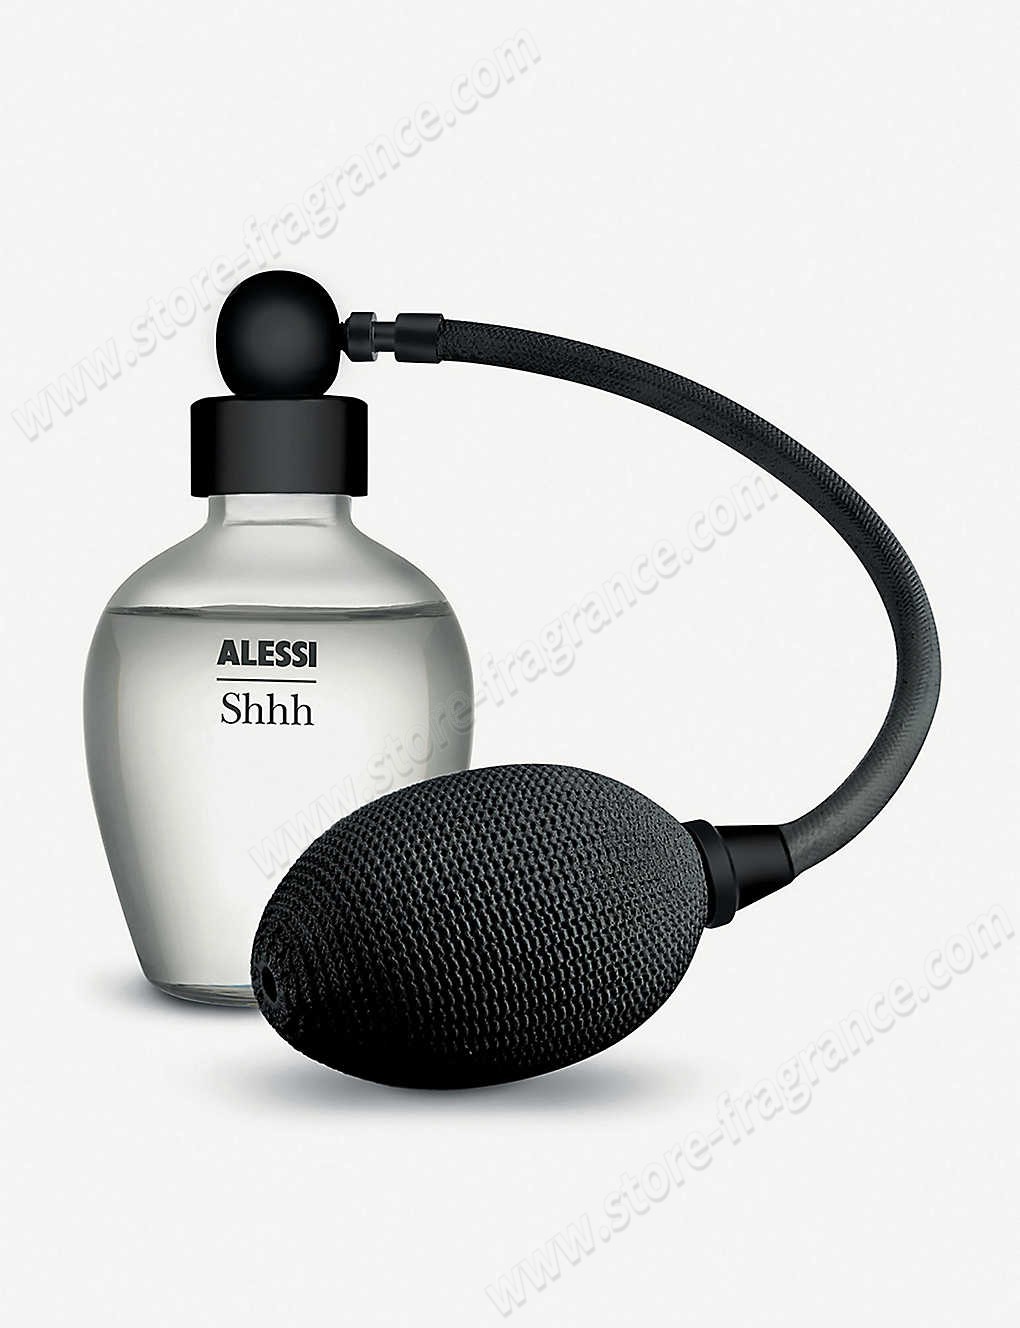 ALESSI/Five Seasons Shhh room spray 150ml Limit Offer - -1